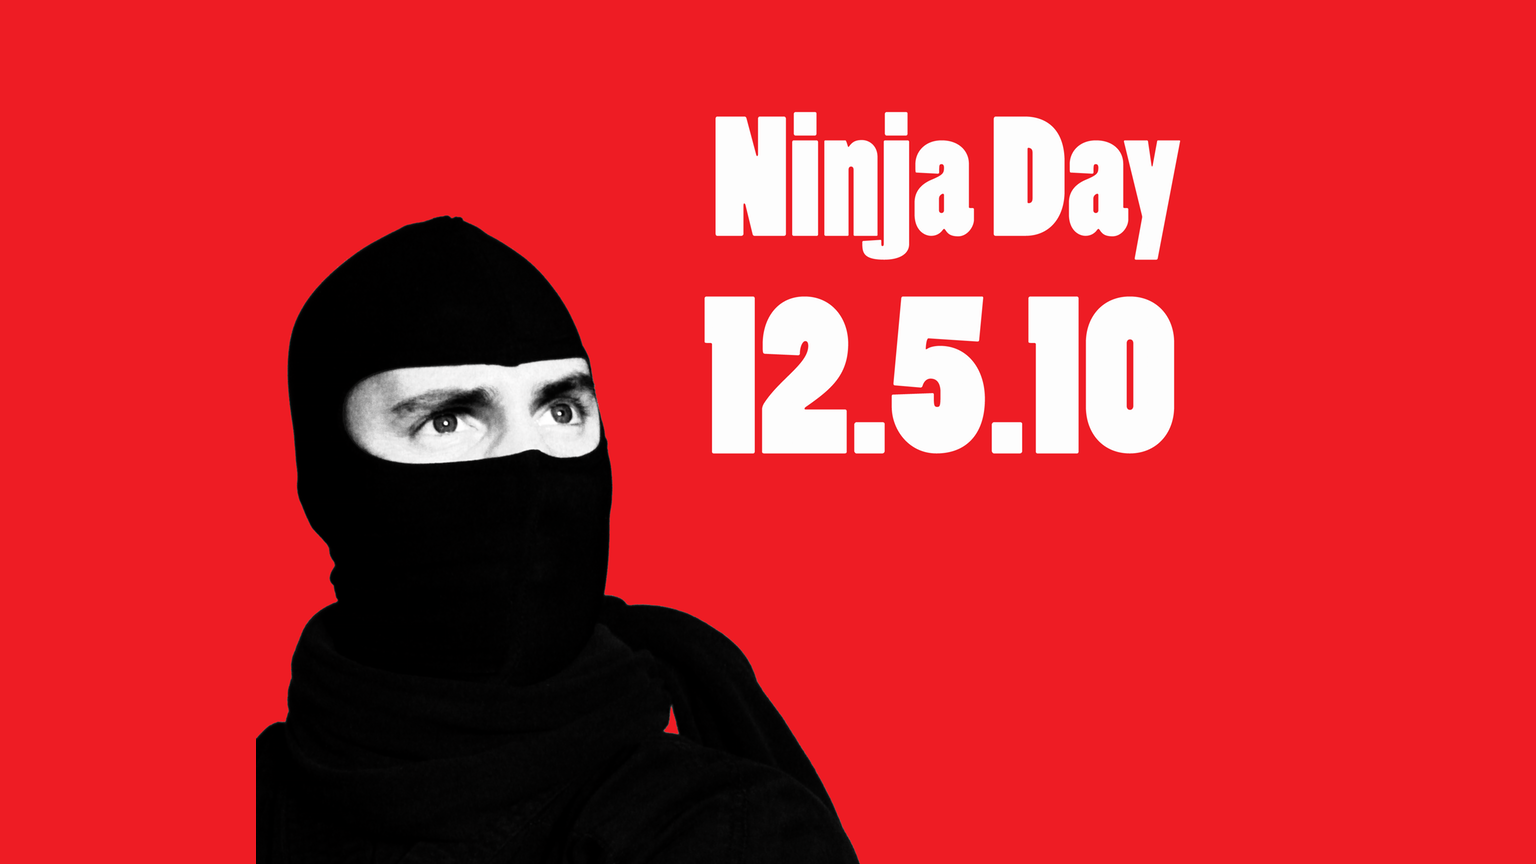 international ninja day 2016 